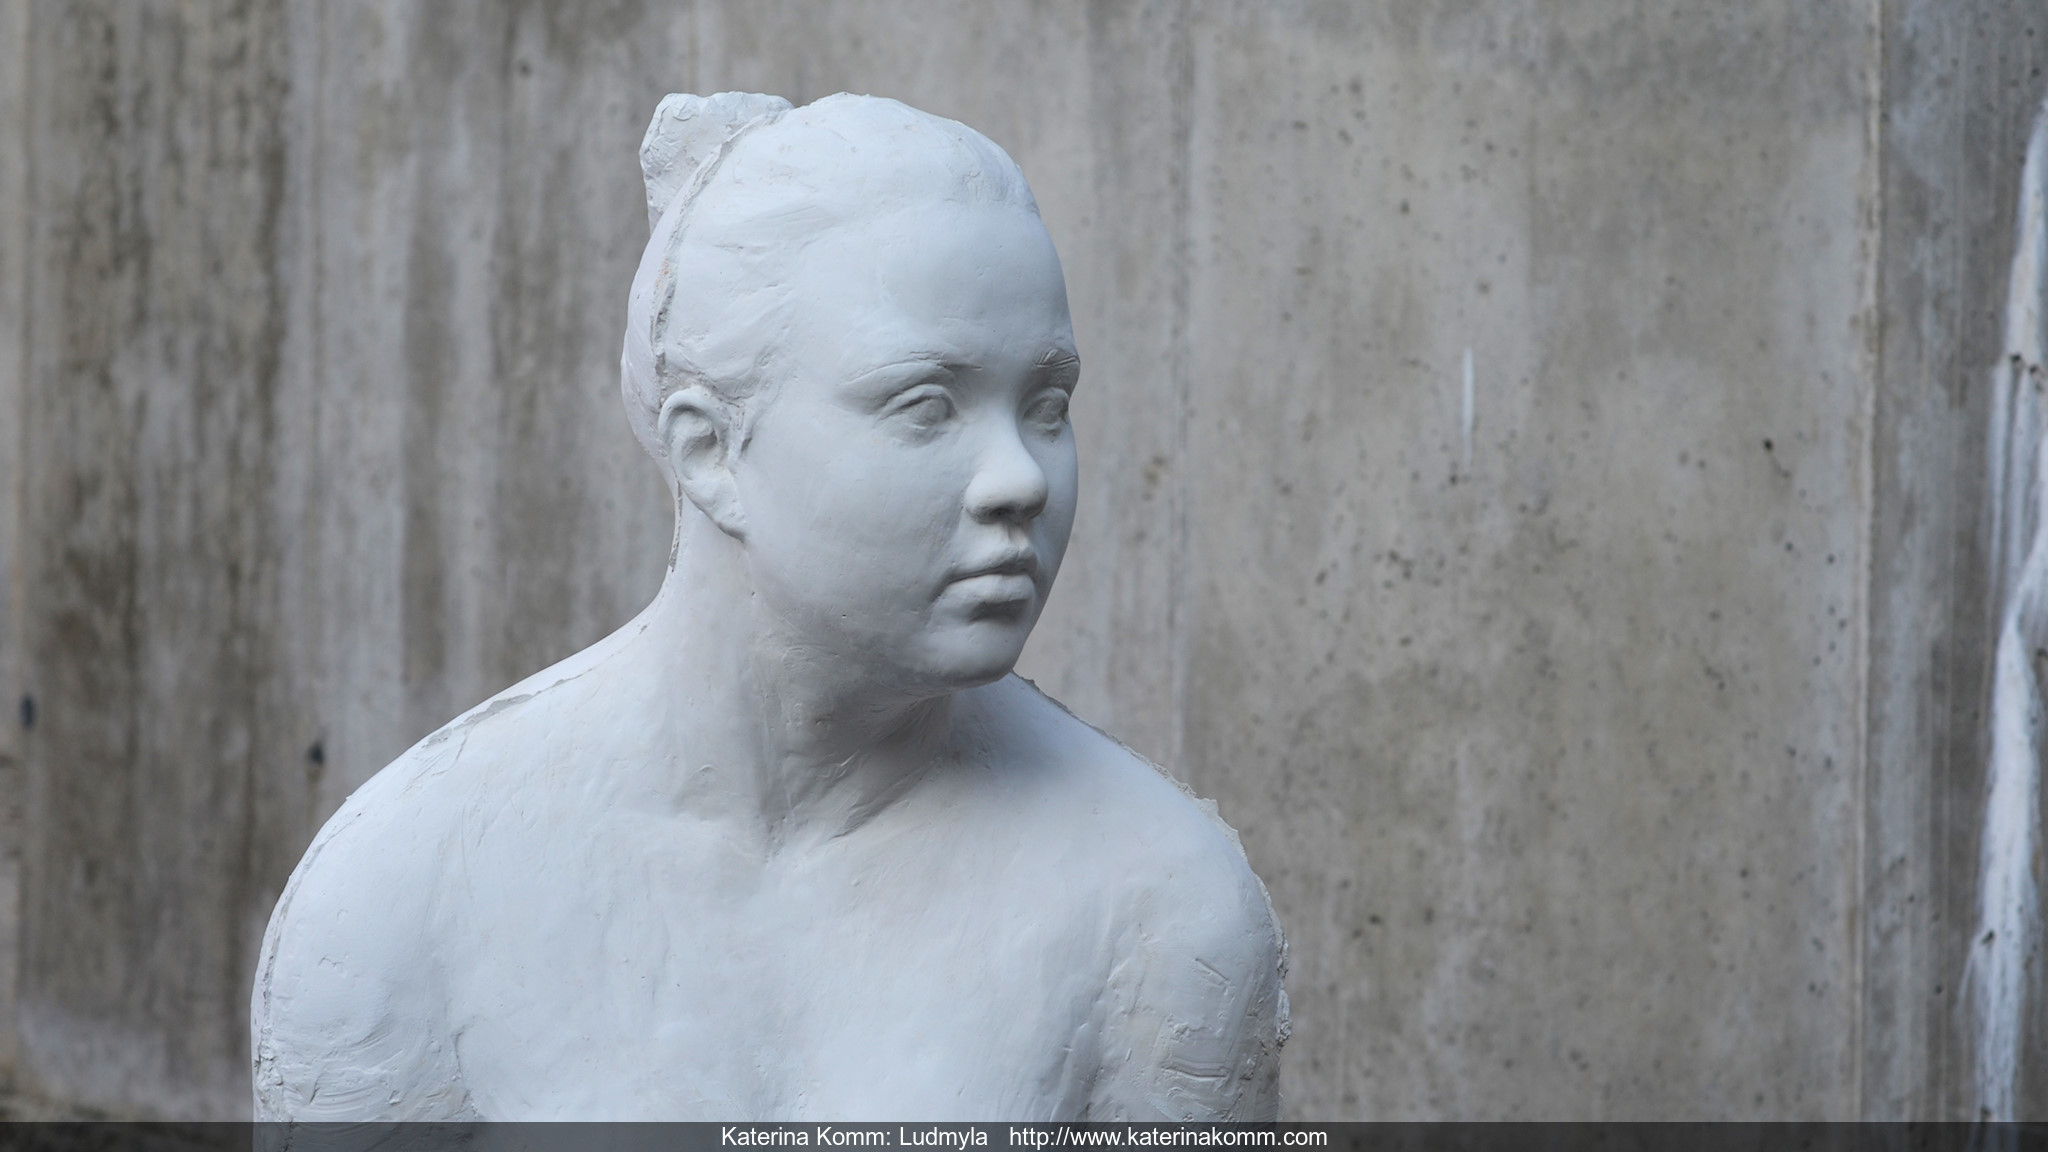 Katerina Komm: sculpture, STUDIE: Ludmyla